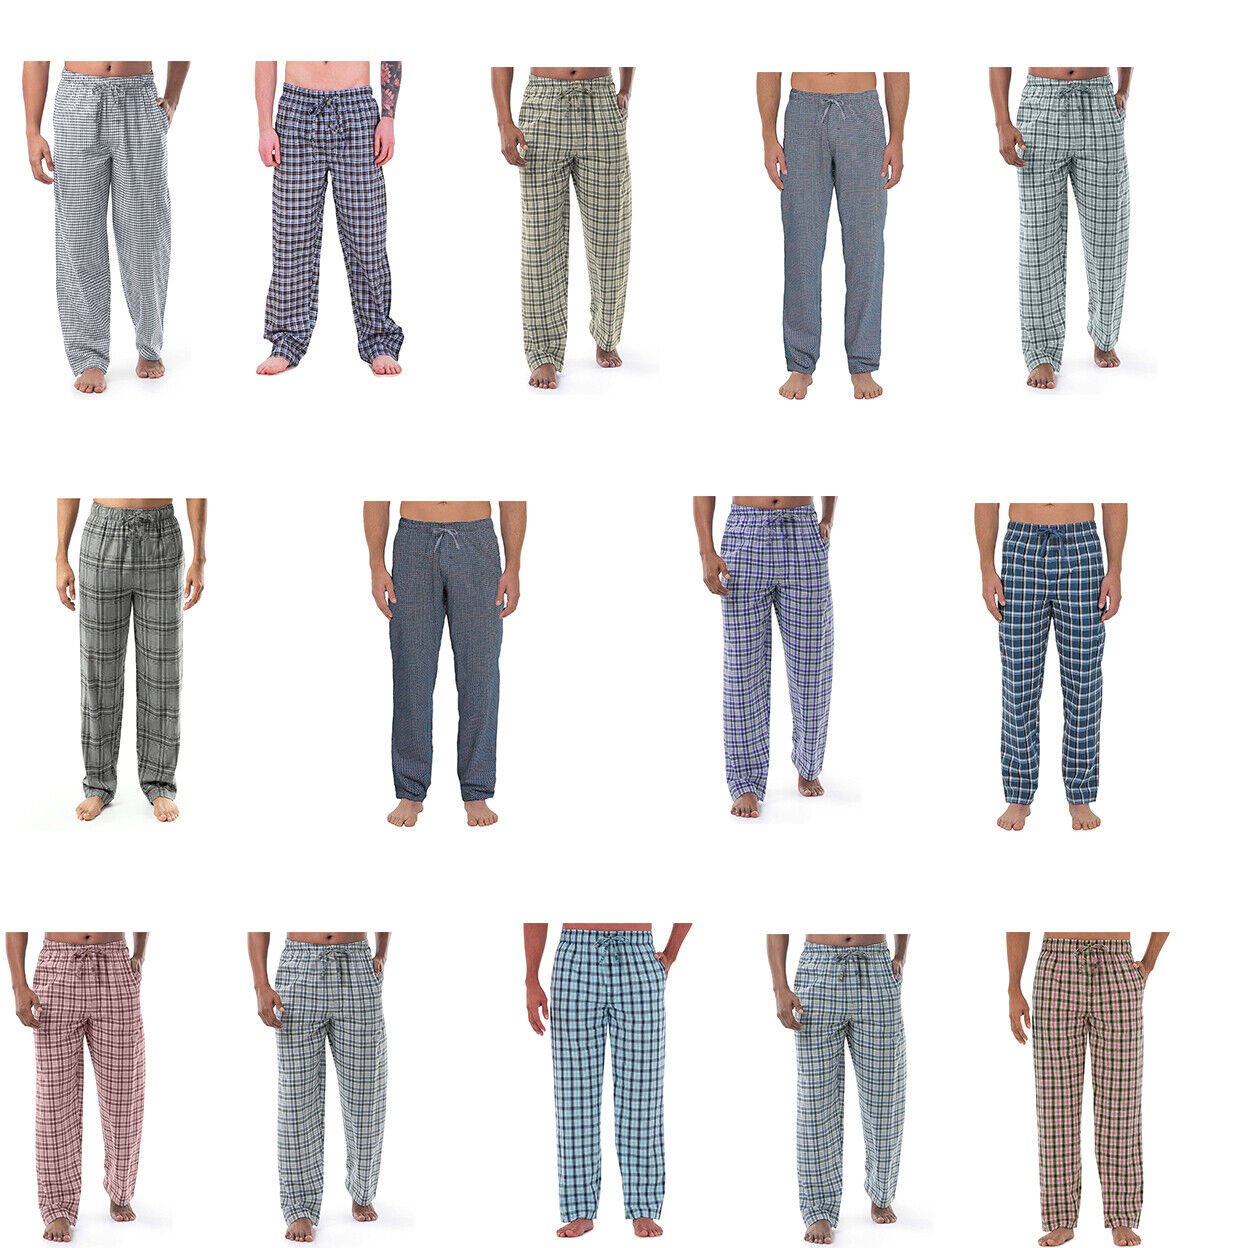 Men's Ultra-Soft Plaid Cotton Jersey Knit Comfy Sleep Lounge Pajama Pants - Beige, X-large